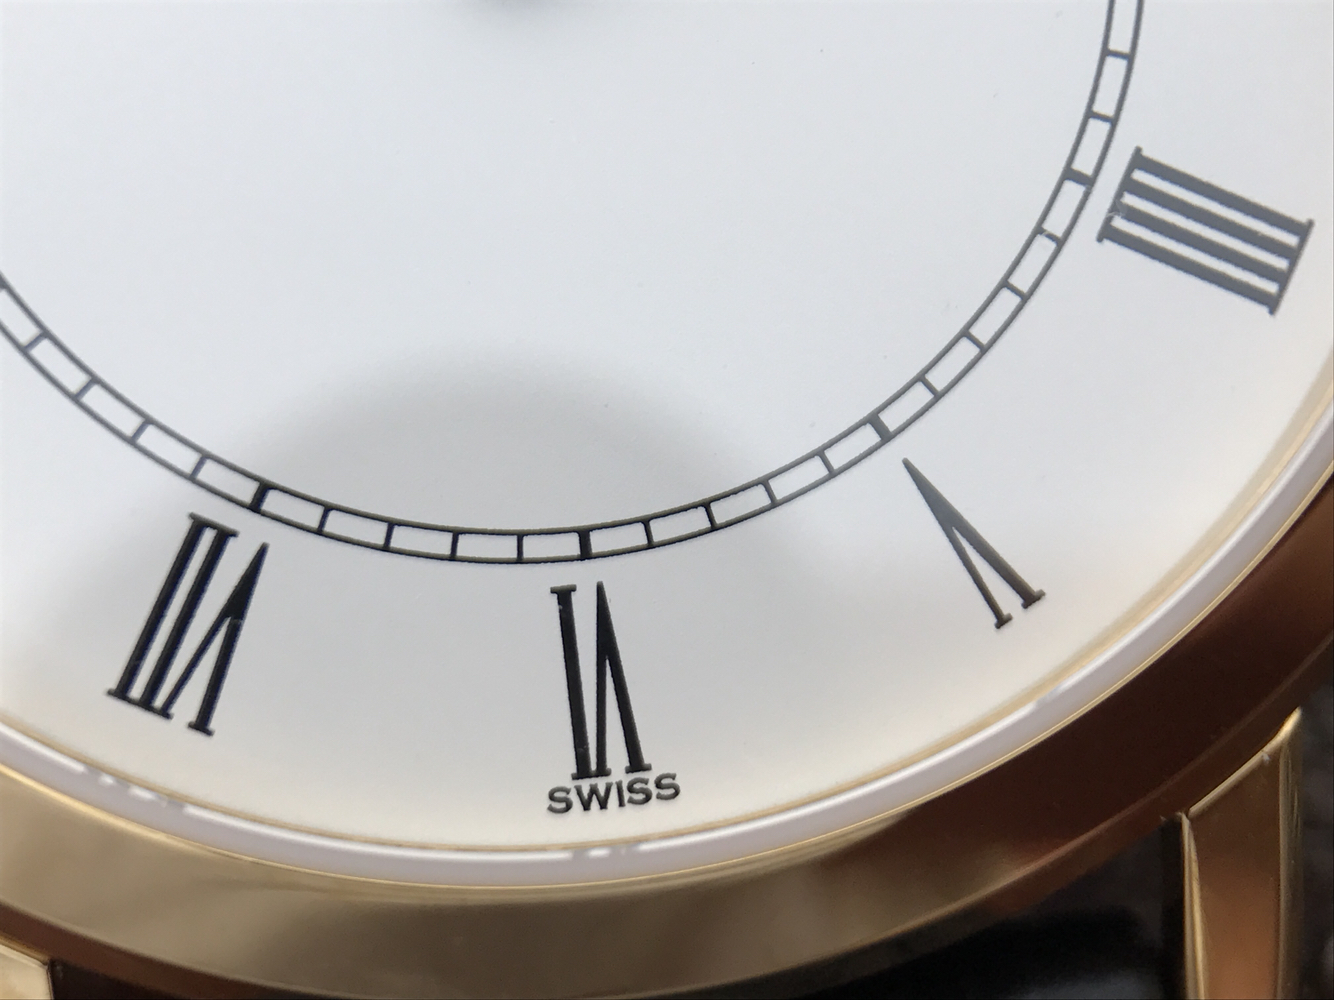 TW伯爵ALTIPLANO真機改“非甲版獨家真正做到原版一比一 Altiplano繫列超薄男士手錶自動機械腕錶¥3180